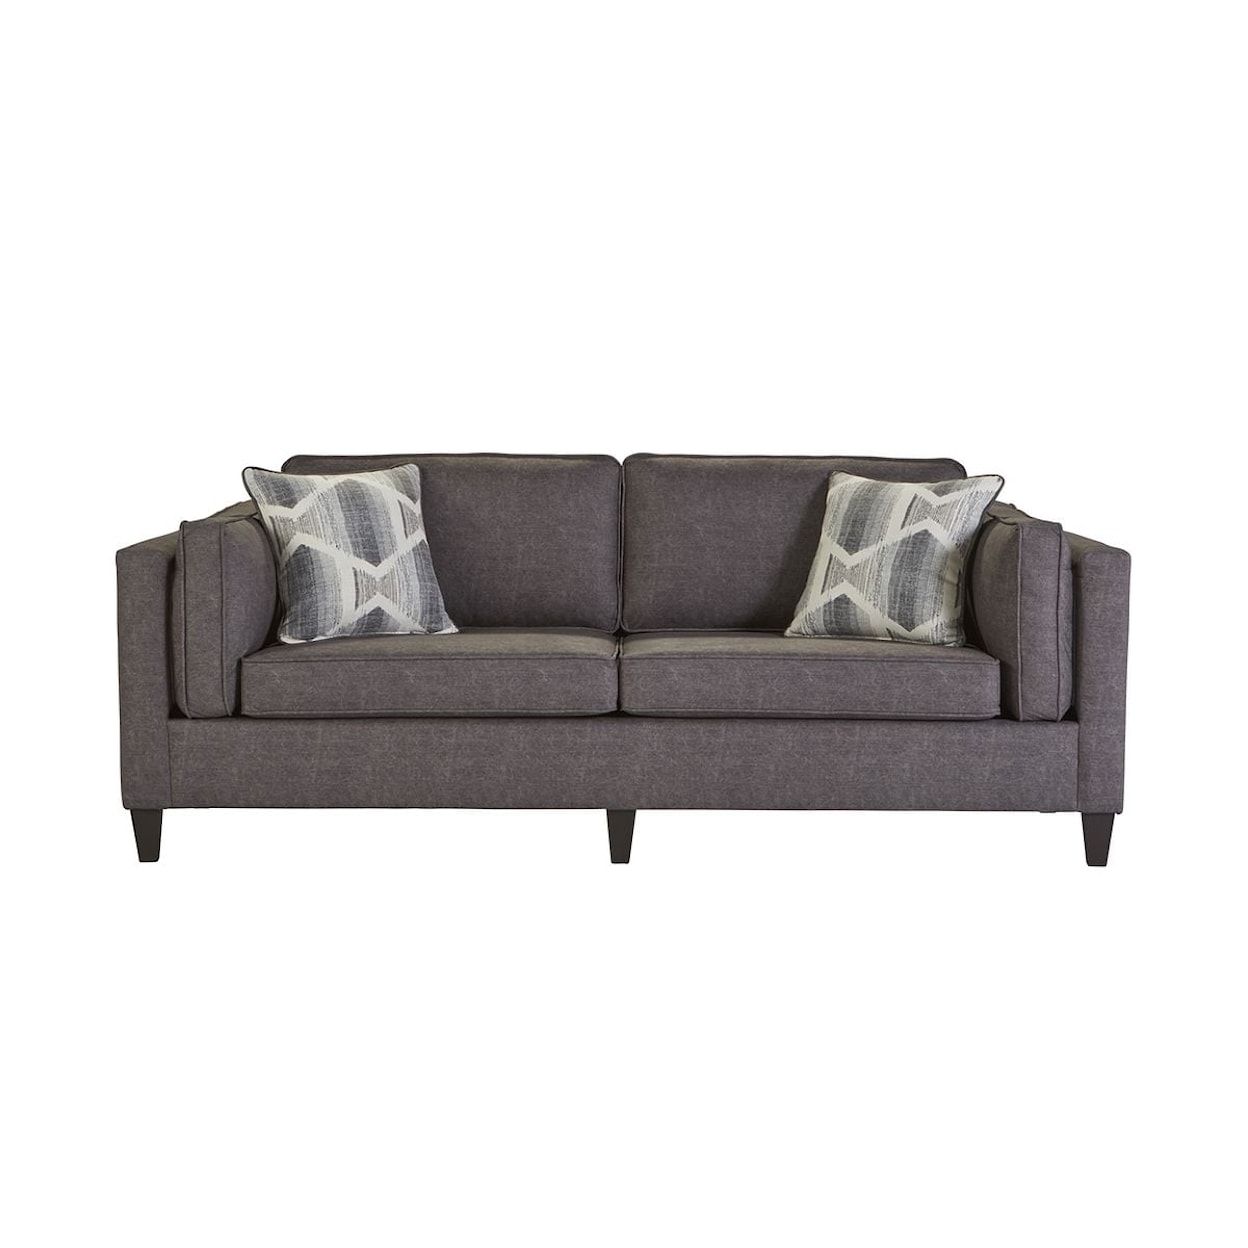 Hughes Furniture 21100 Sofa